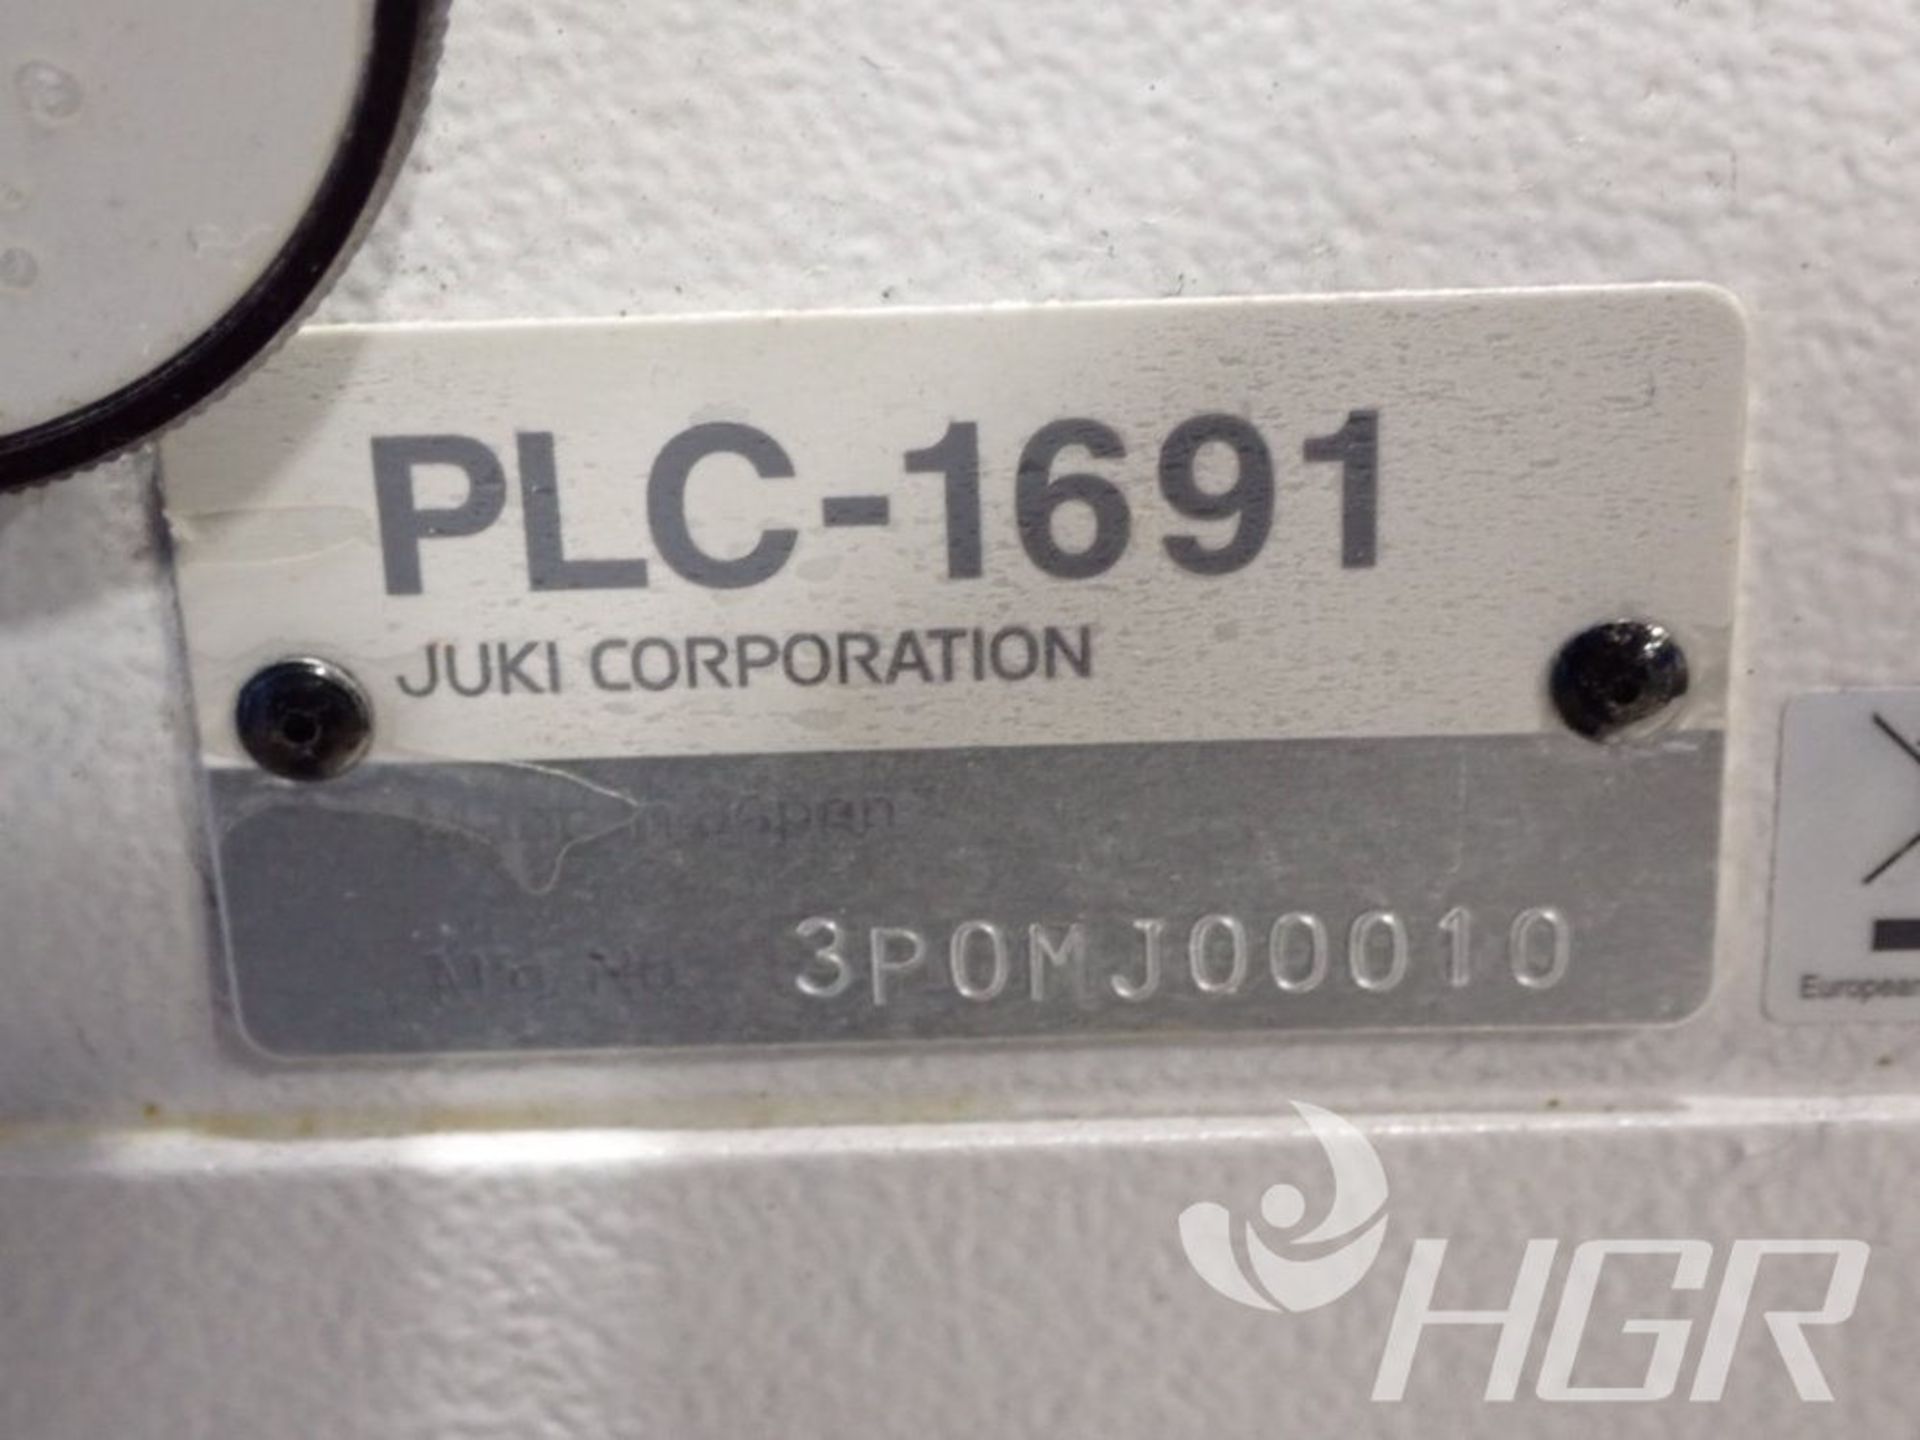 JUKI SEWING MACHINE, Model PLC-1691, Date: n/a; s/n 3P0MJ00010, Approx. Capacity: n/a, Power: n/a, - Image 3 of 25